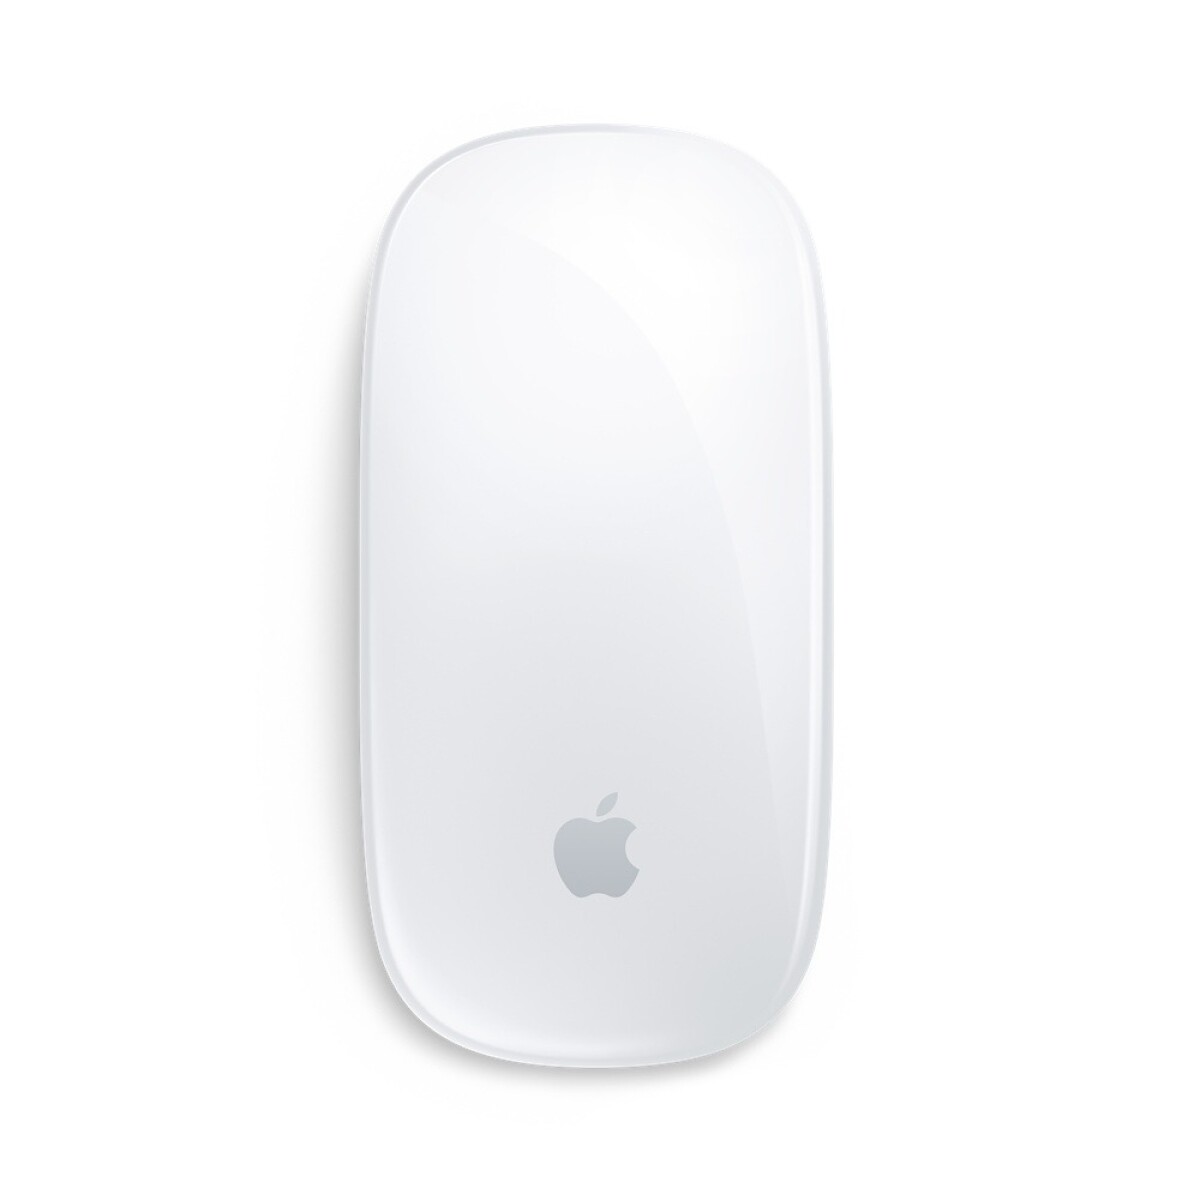 Apple magic mouse 2 - Silver 